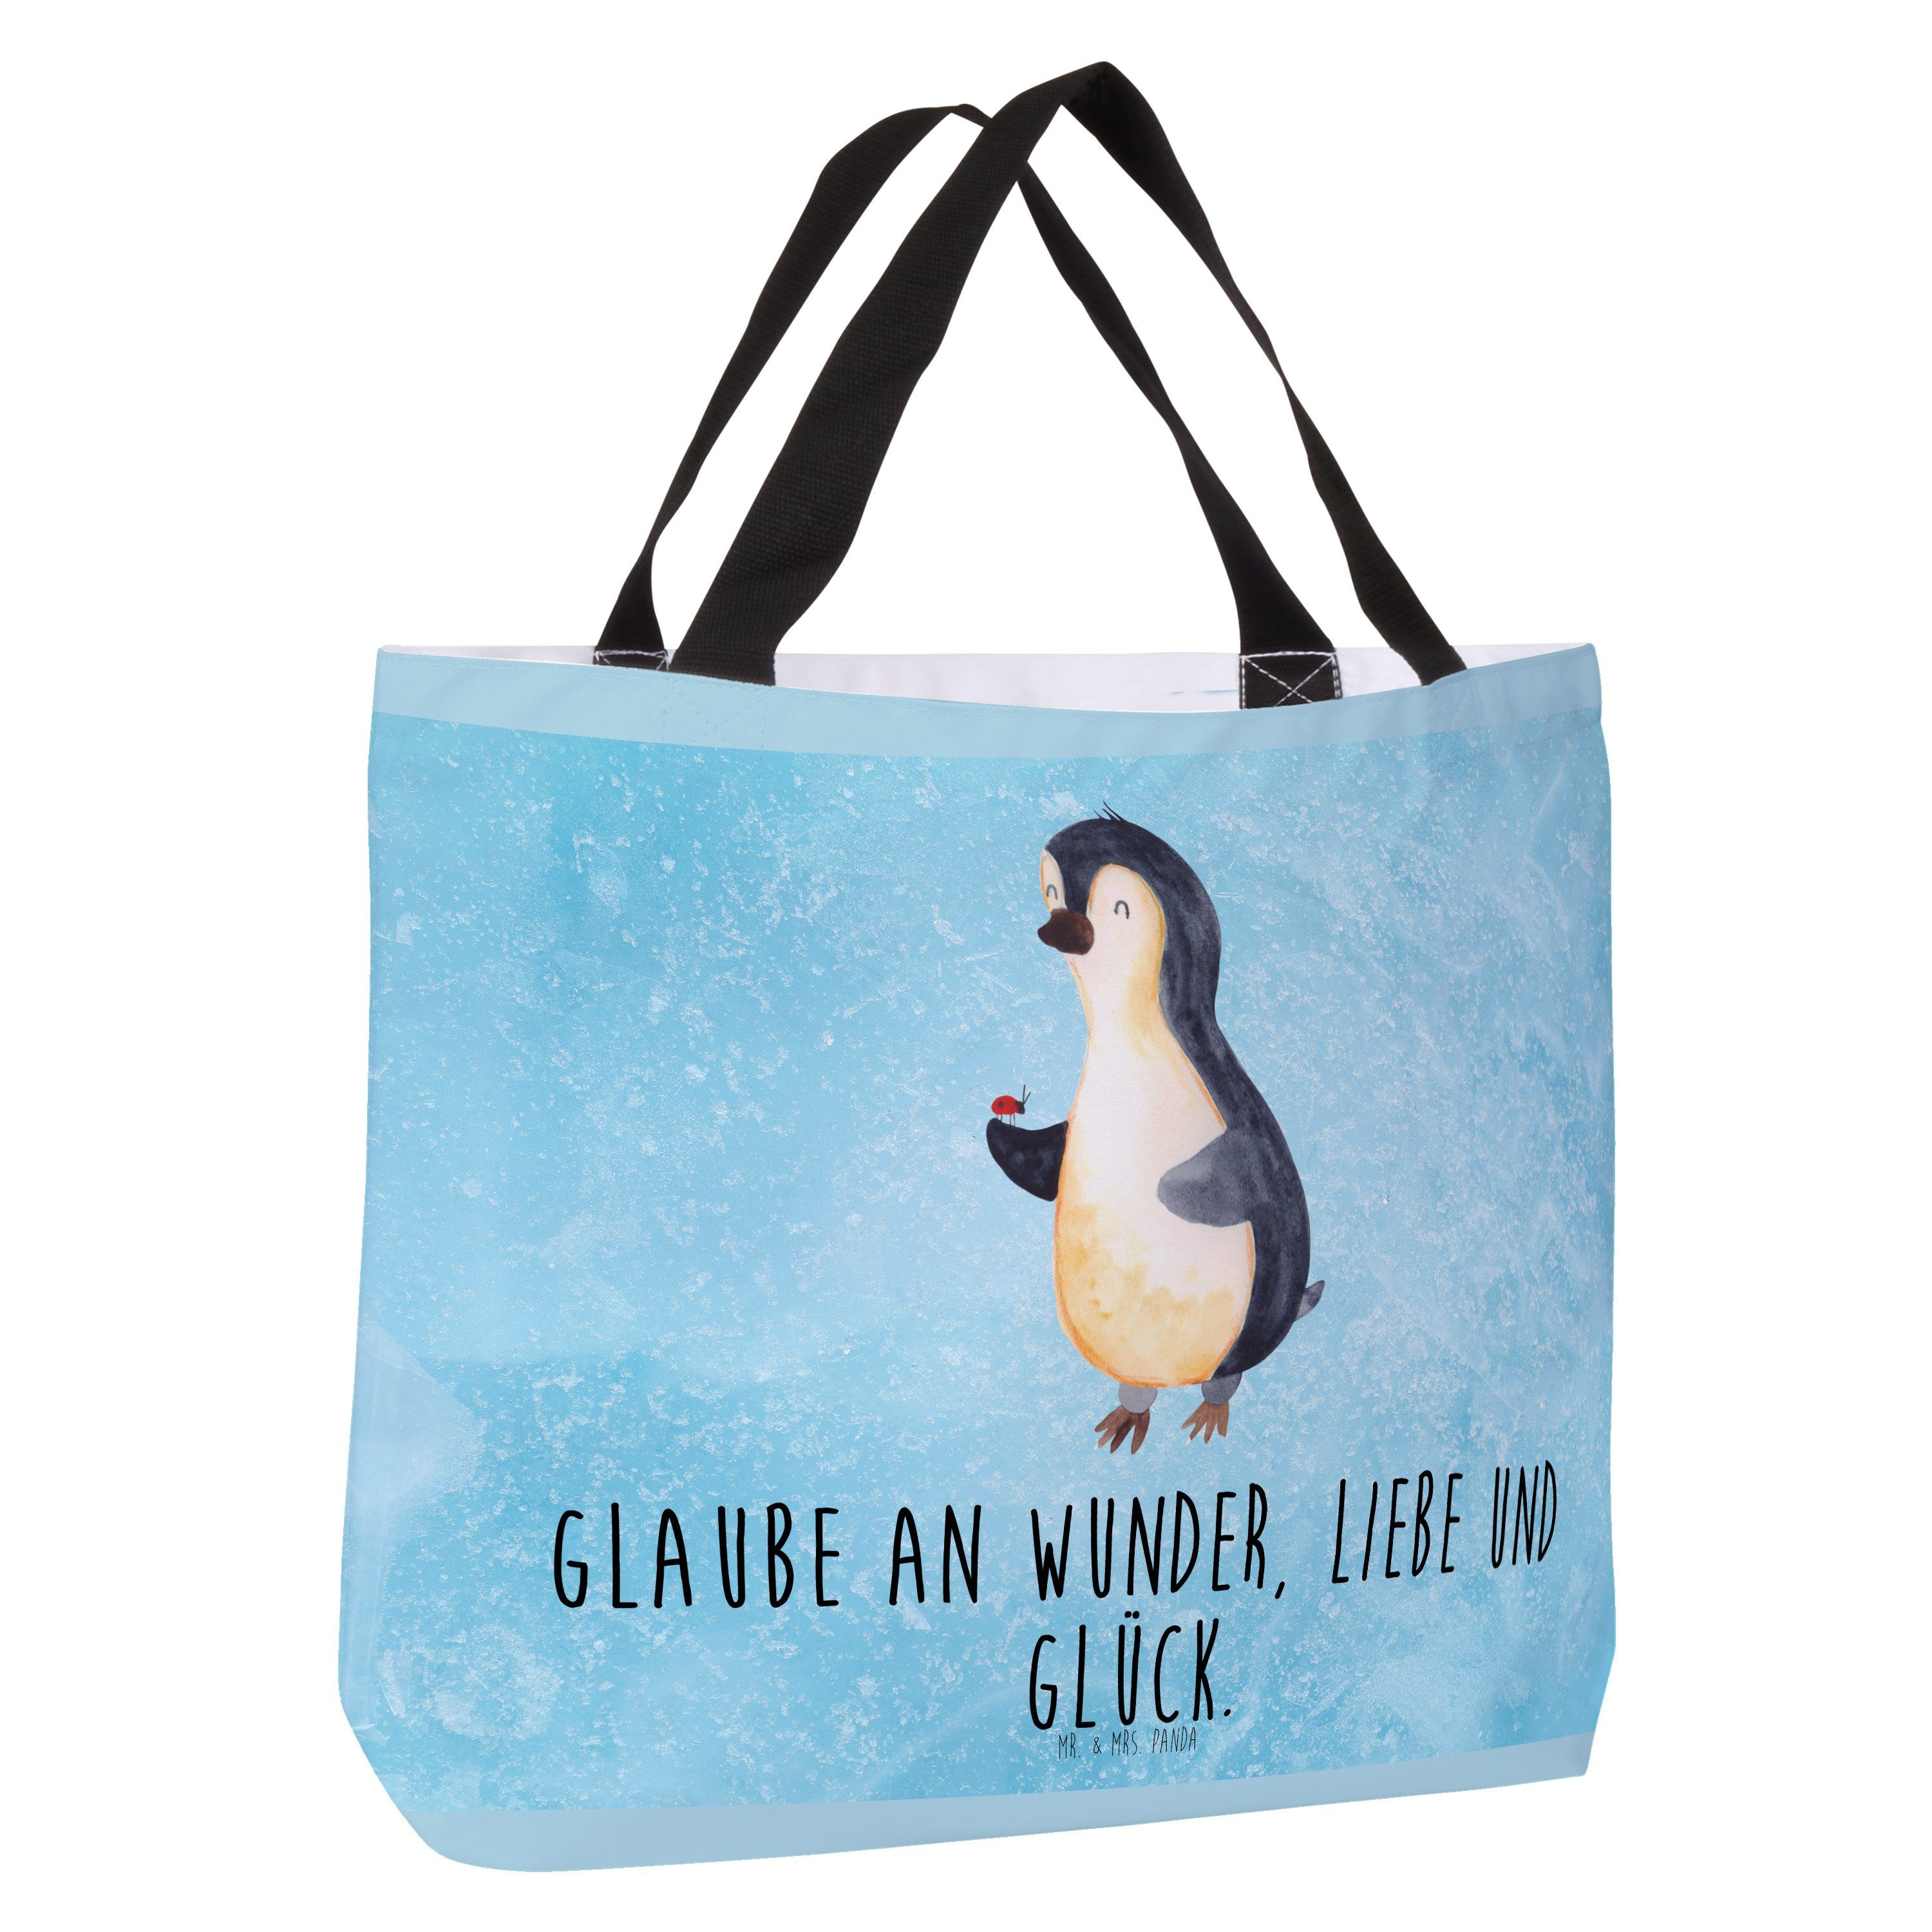 Mr. & Mrs. Panda - (1-tlg) - Pinguine, Geschenk, Marienkäfer Shopper Pinguin Beutel, Eisblau Glück, Wu